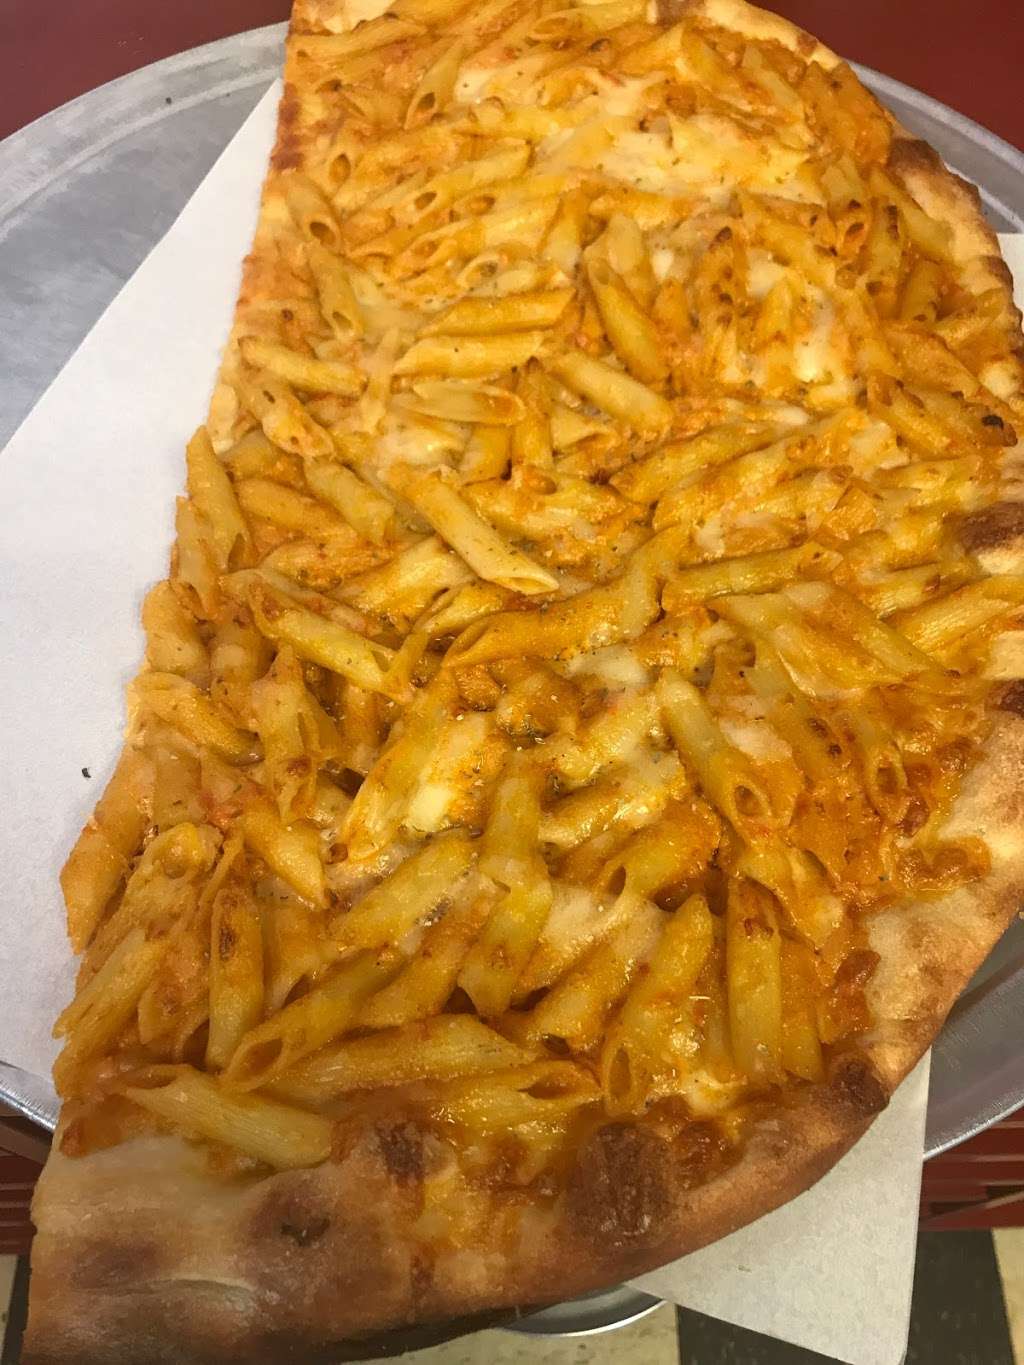 Emilia Romagna Pizza | 247 Valley Blvd, Wood-Ridge, NJ 07075 | Phone: (201) 935-8383